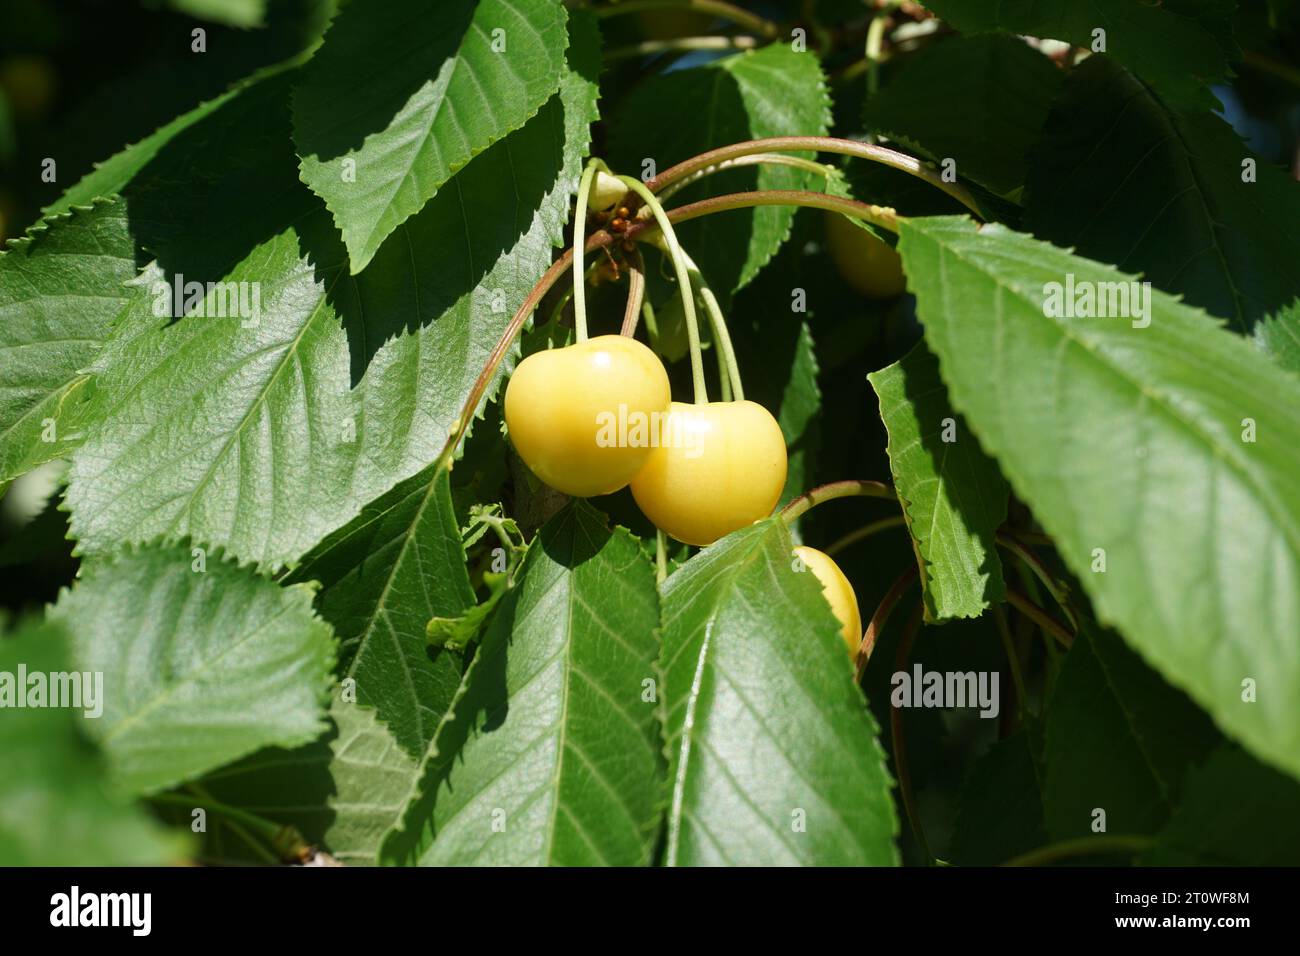 rare yellow cherry variety on tree Stock Photo